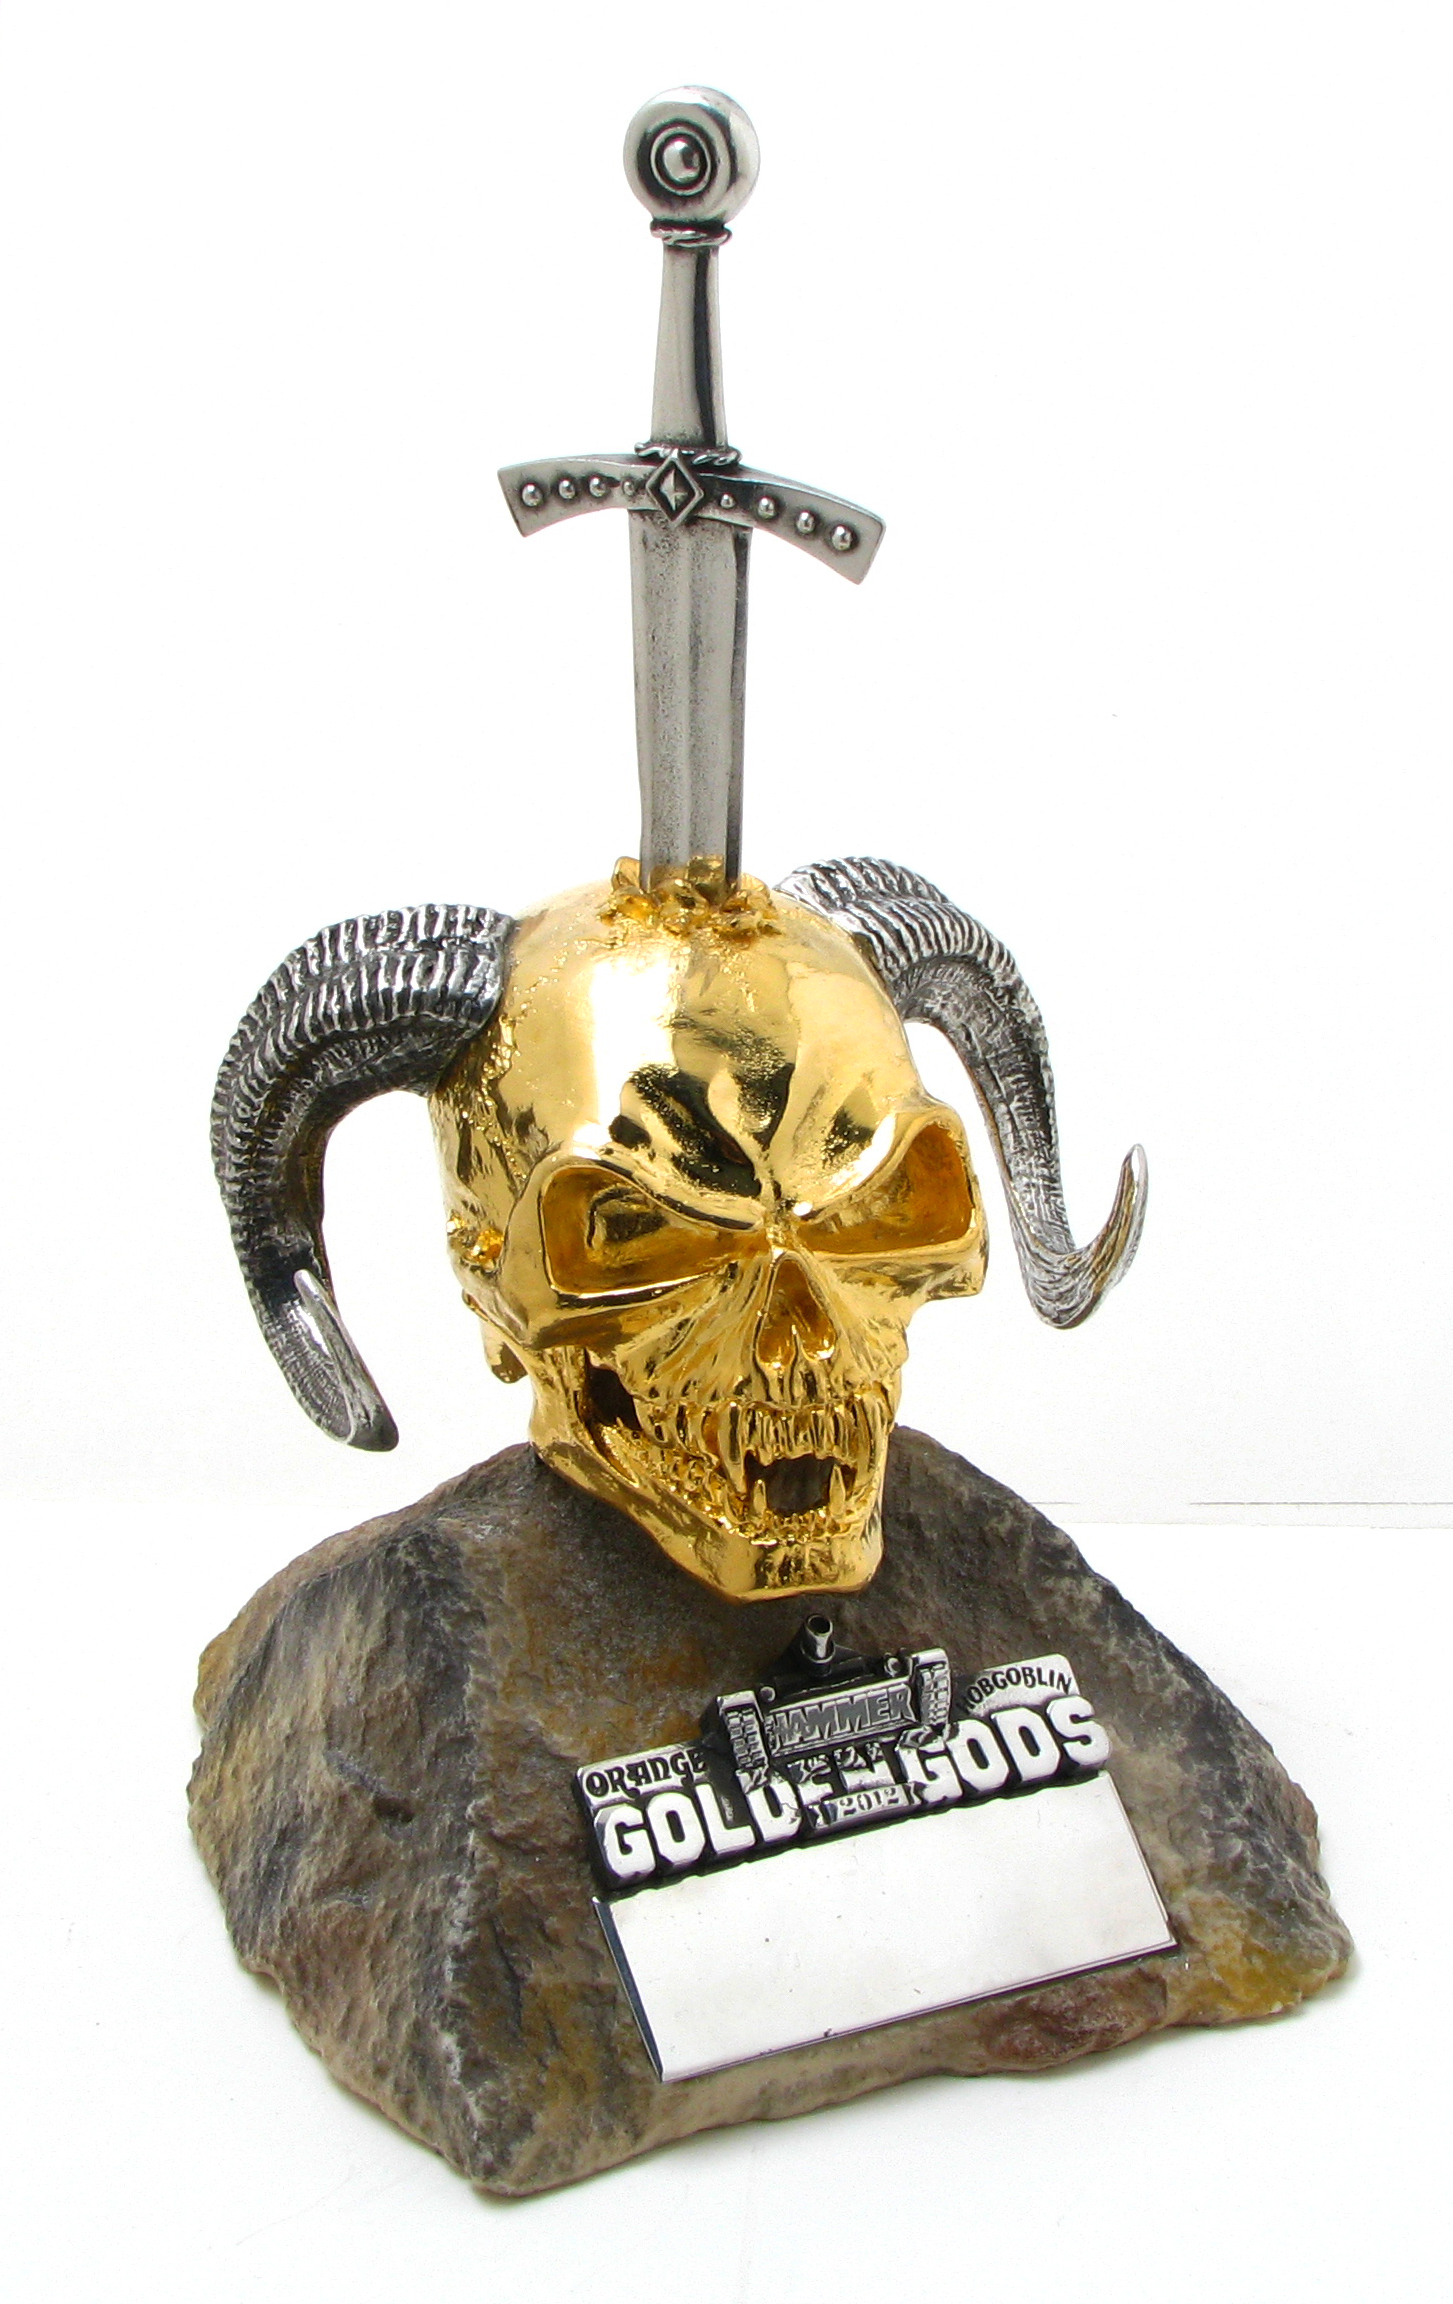 Blog » Metal Hammer Golden Gods!!!